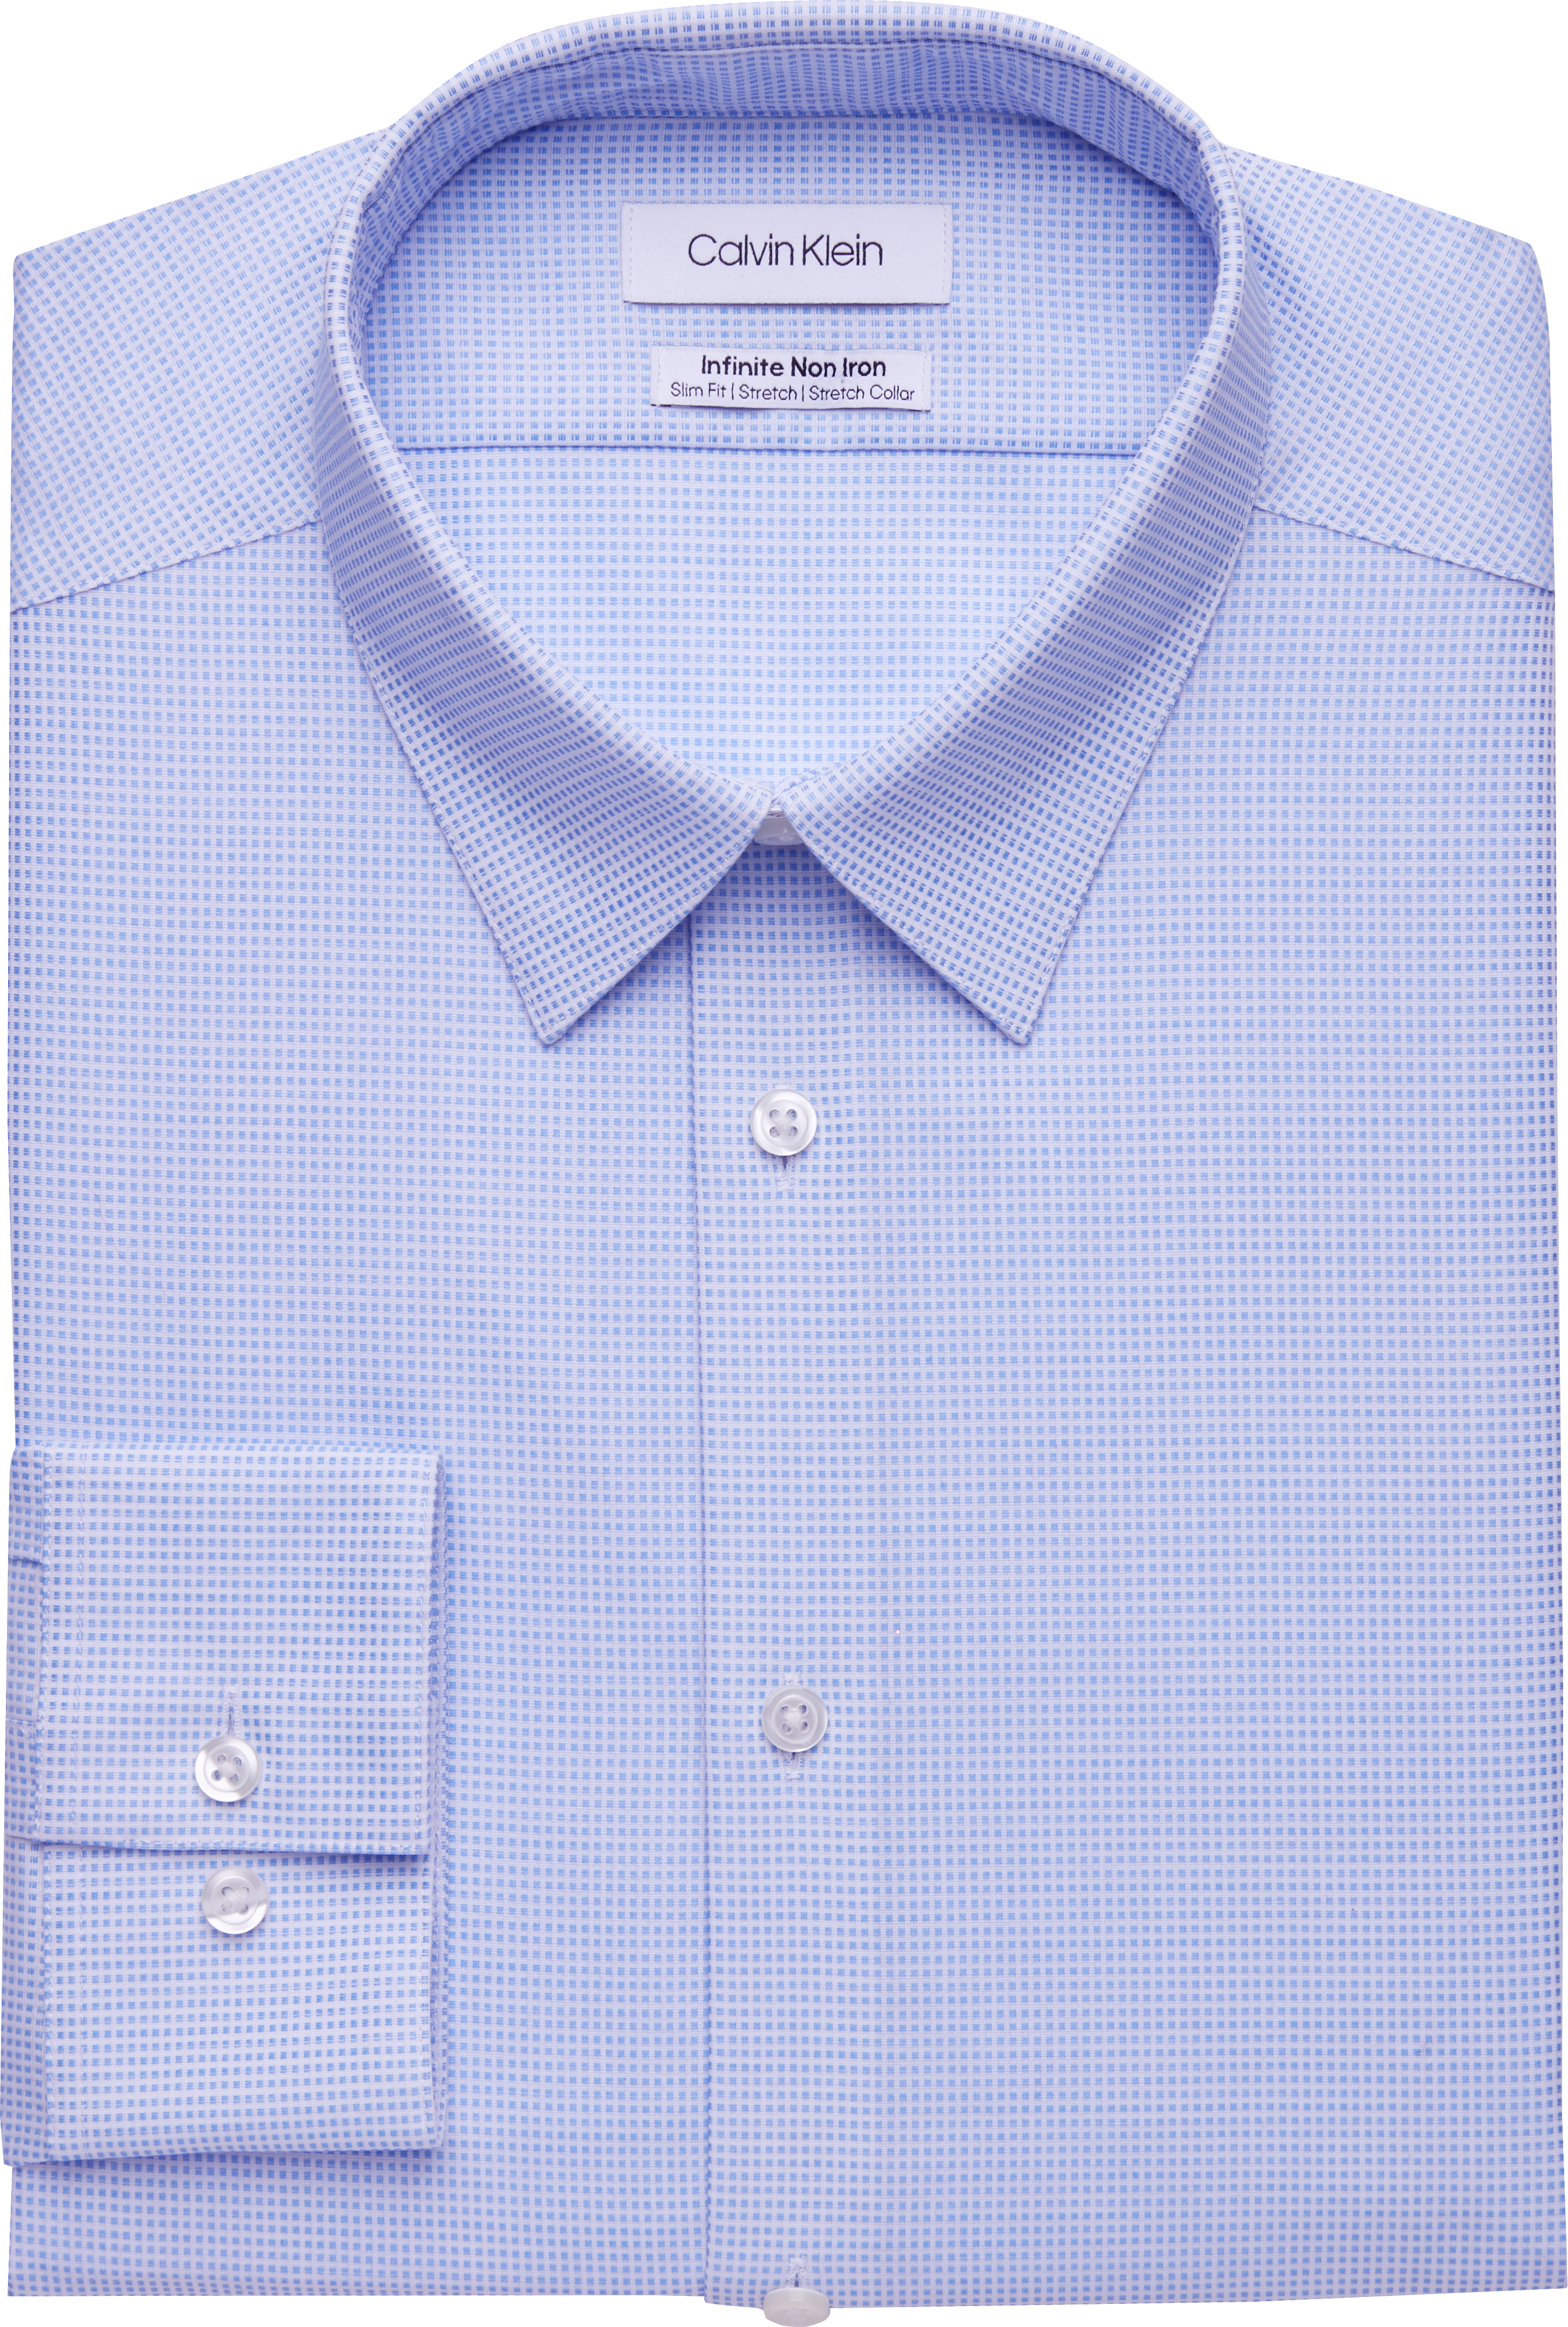 Calvin Klein Infinite Non-Iron Slim Fit Stretch Collar Dress Shirt, Blue  Micro-Dot - Men's Featured